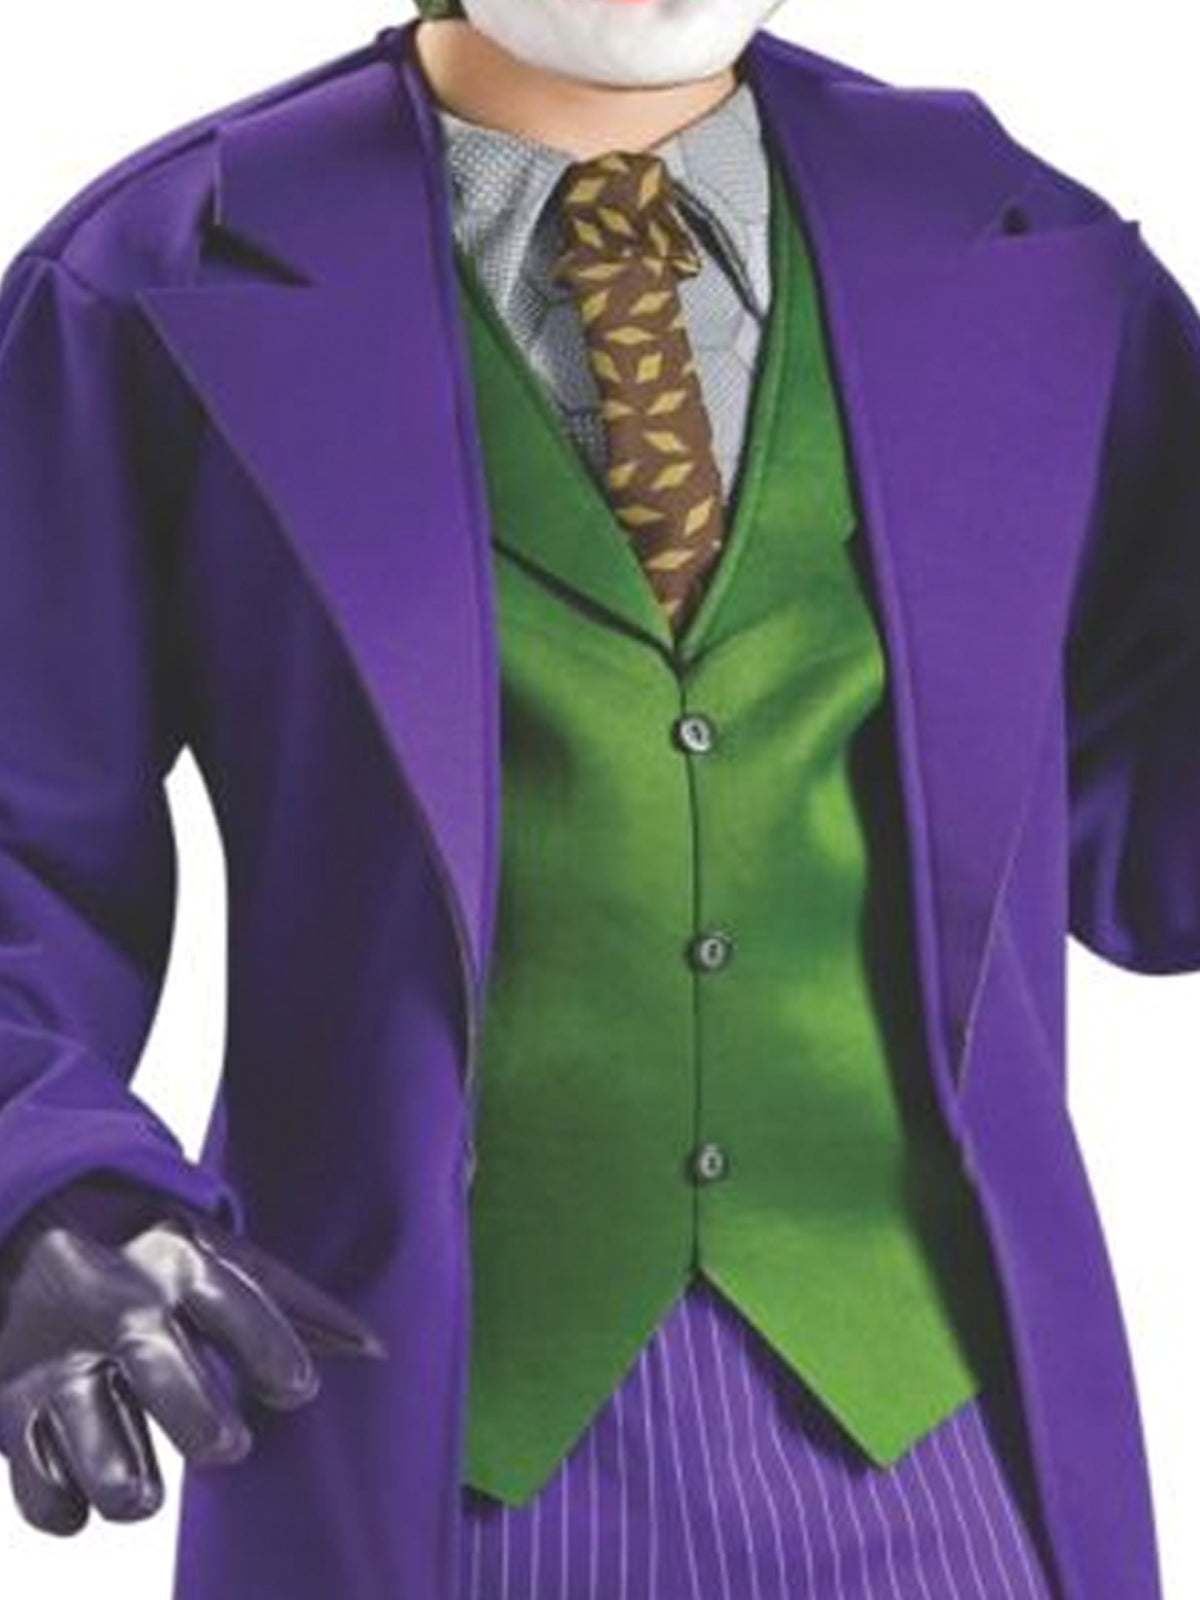 The Joker Deluxe Costume for Kids - Warner Bros Dark Knight